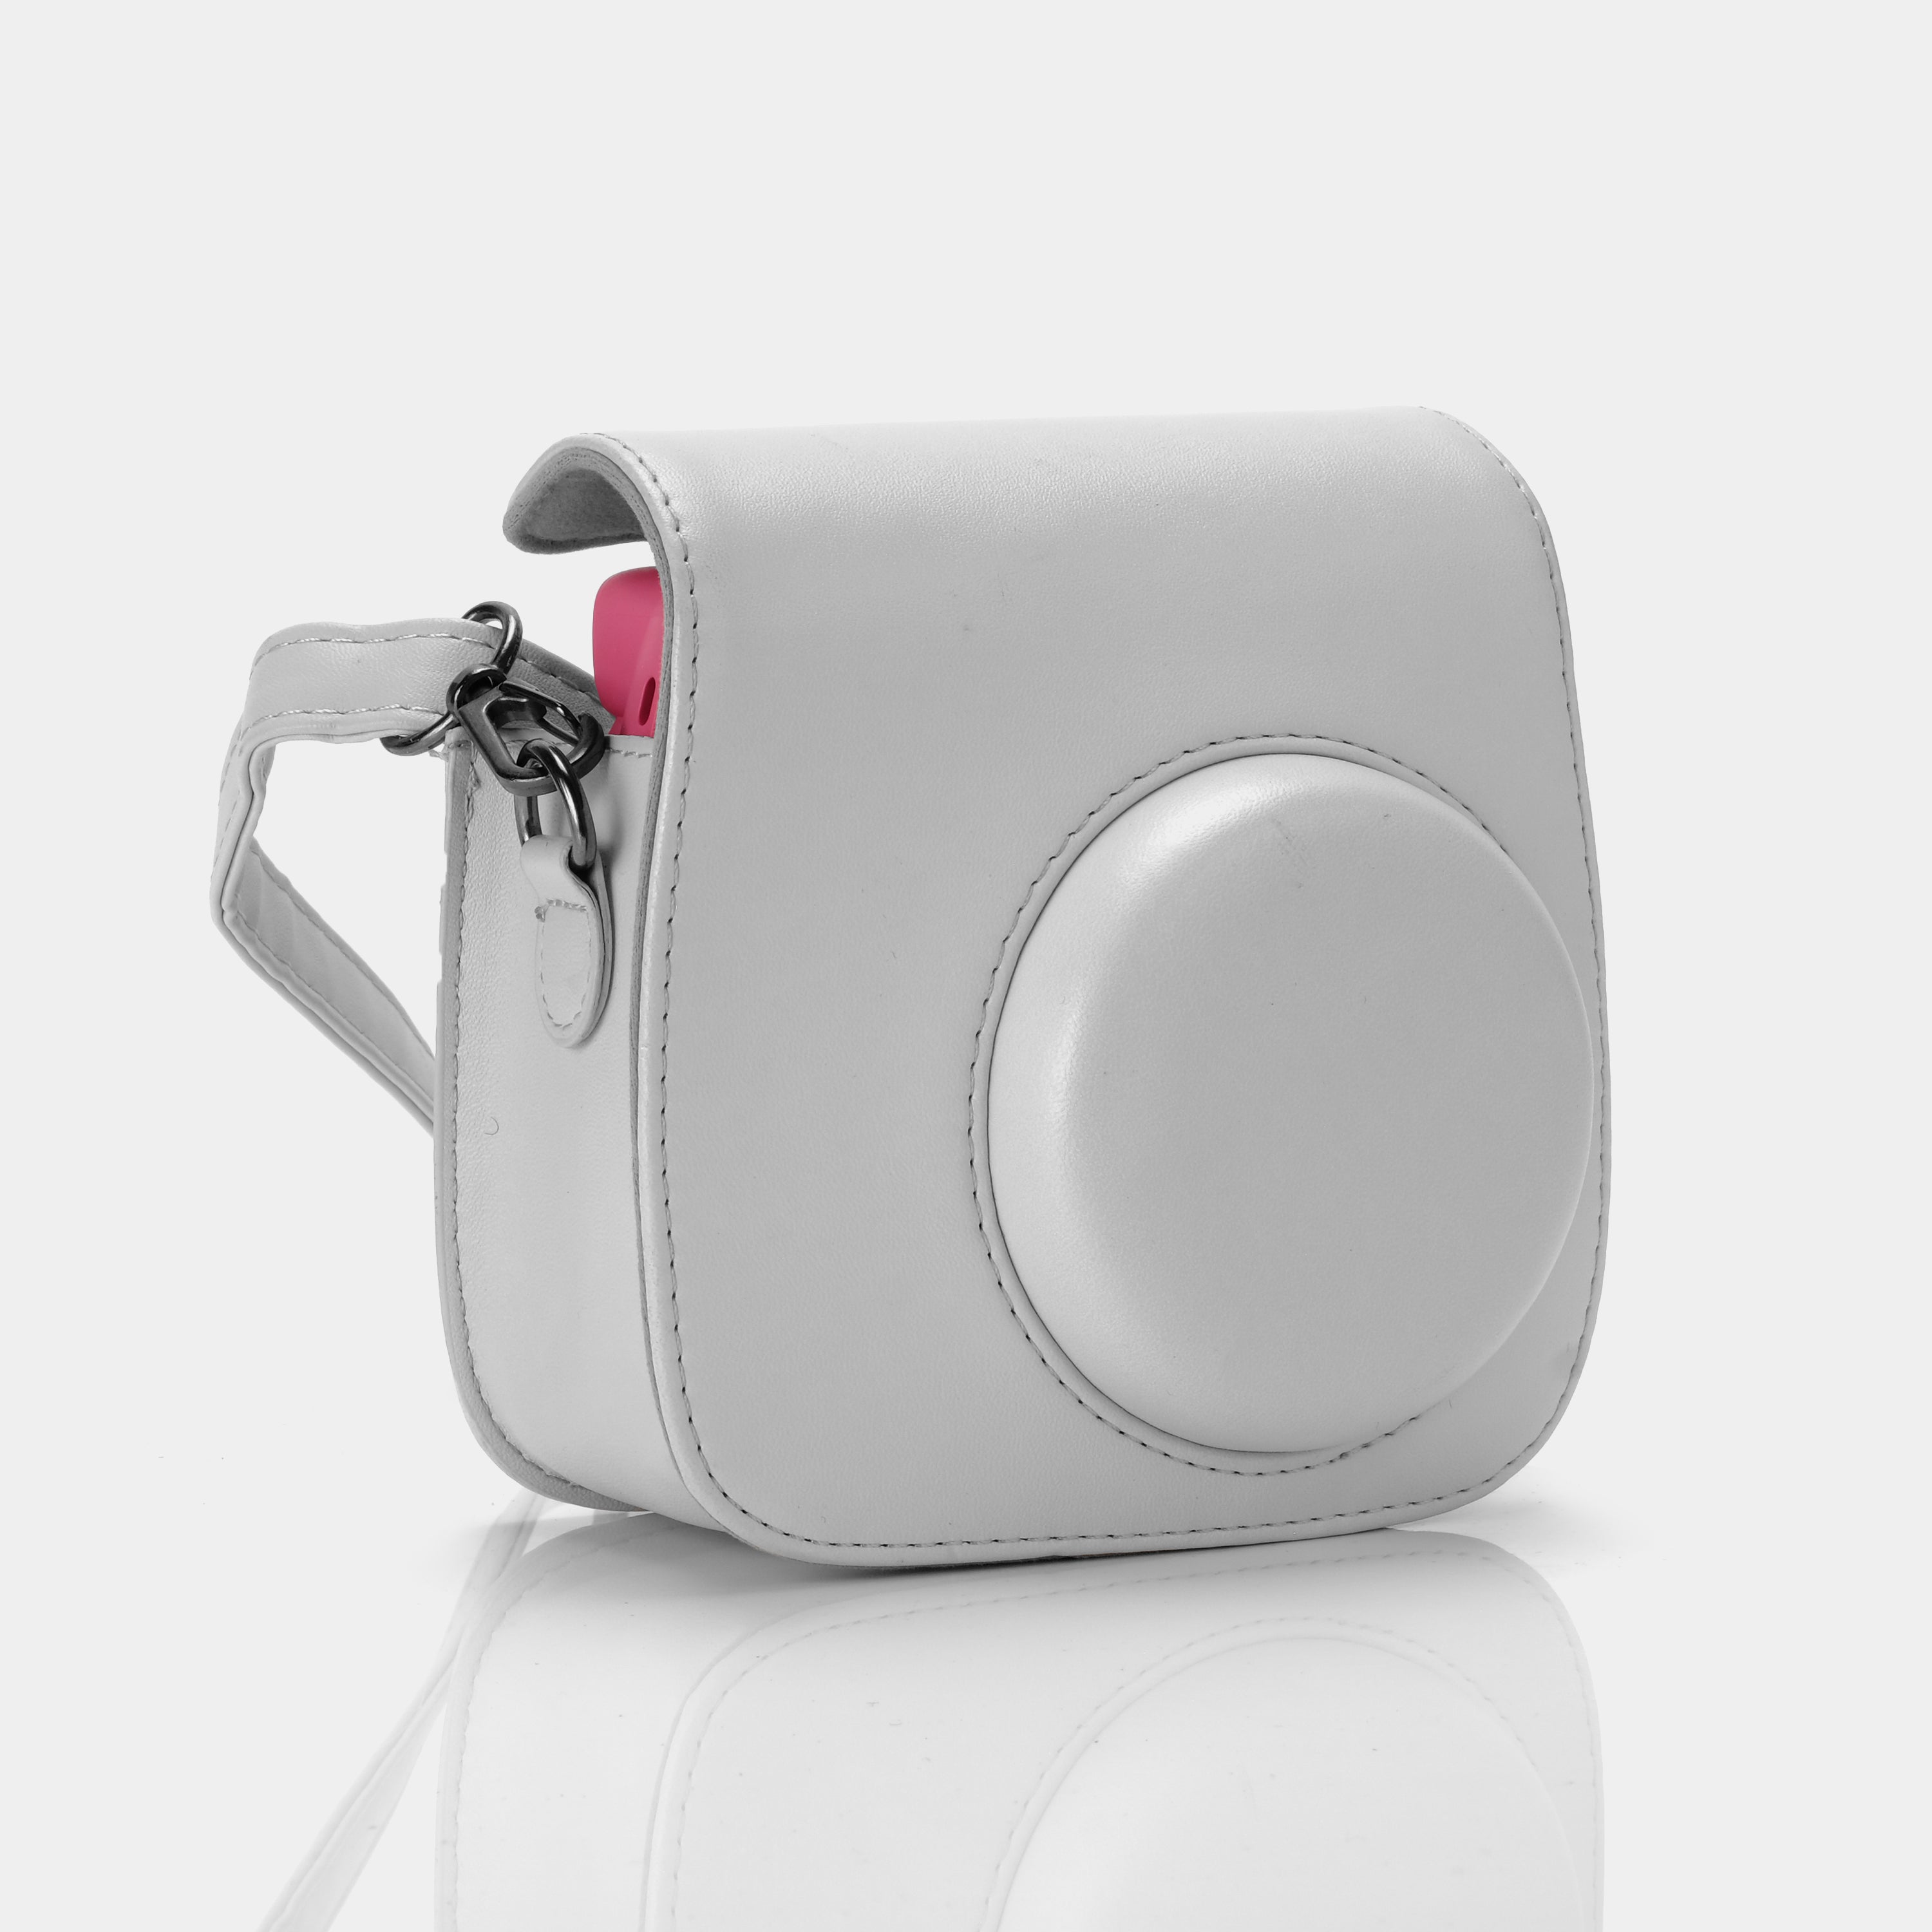 Fujifilm Instax Mini 8 Pink Instant Film Camera With Grey Bag - Refurb